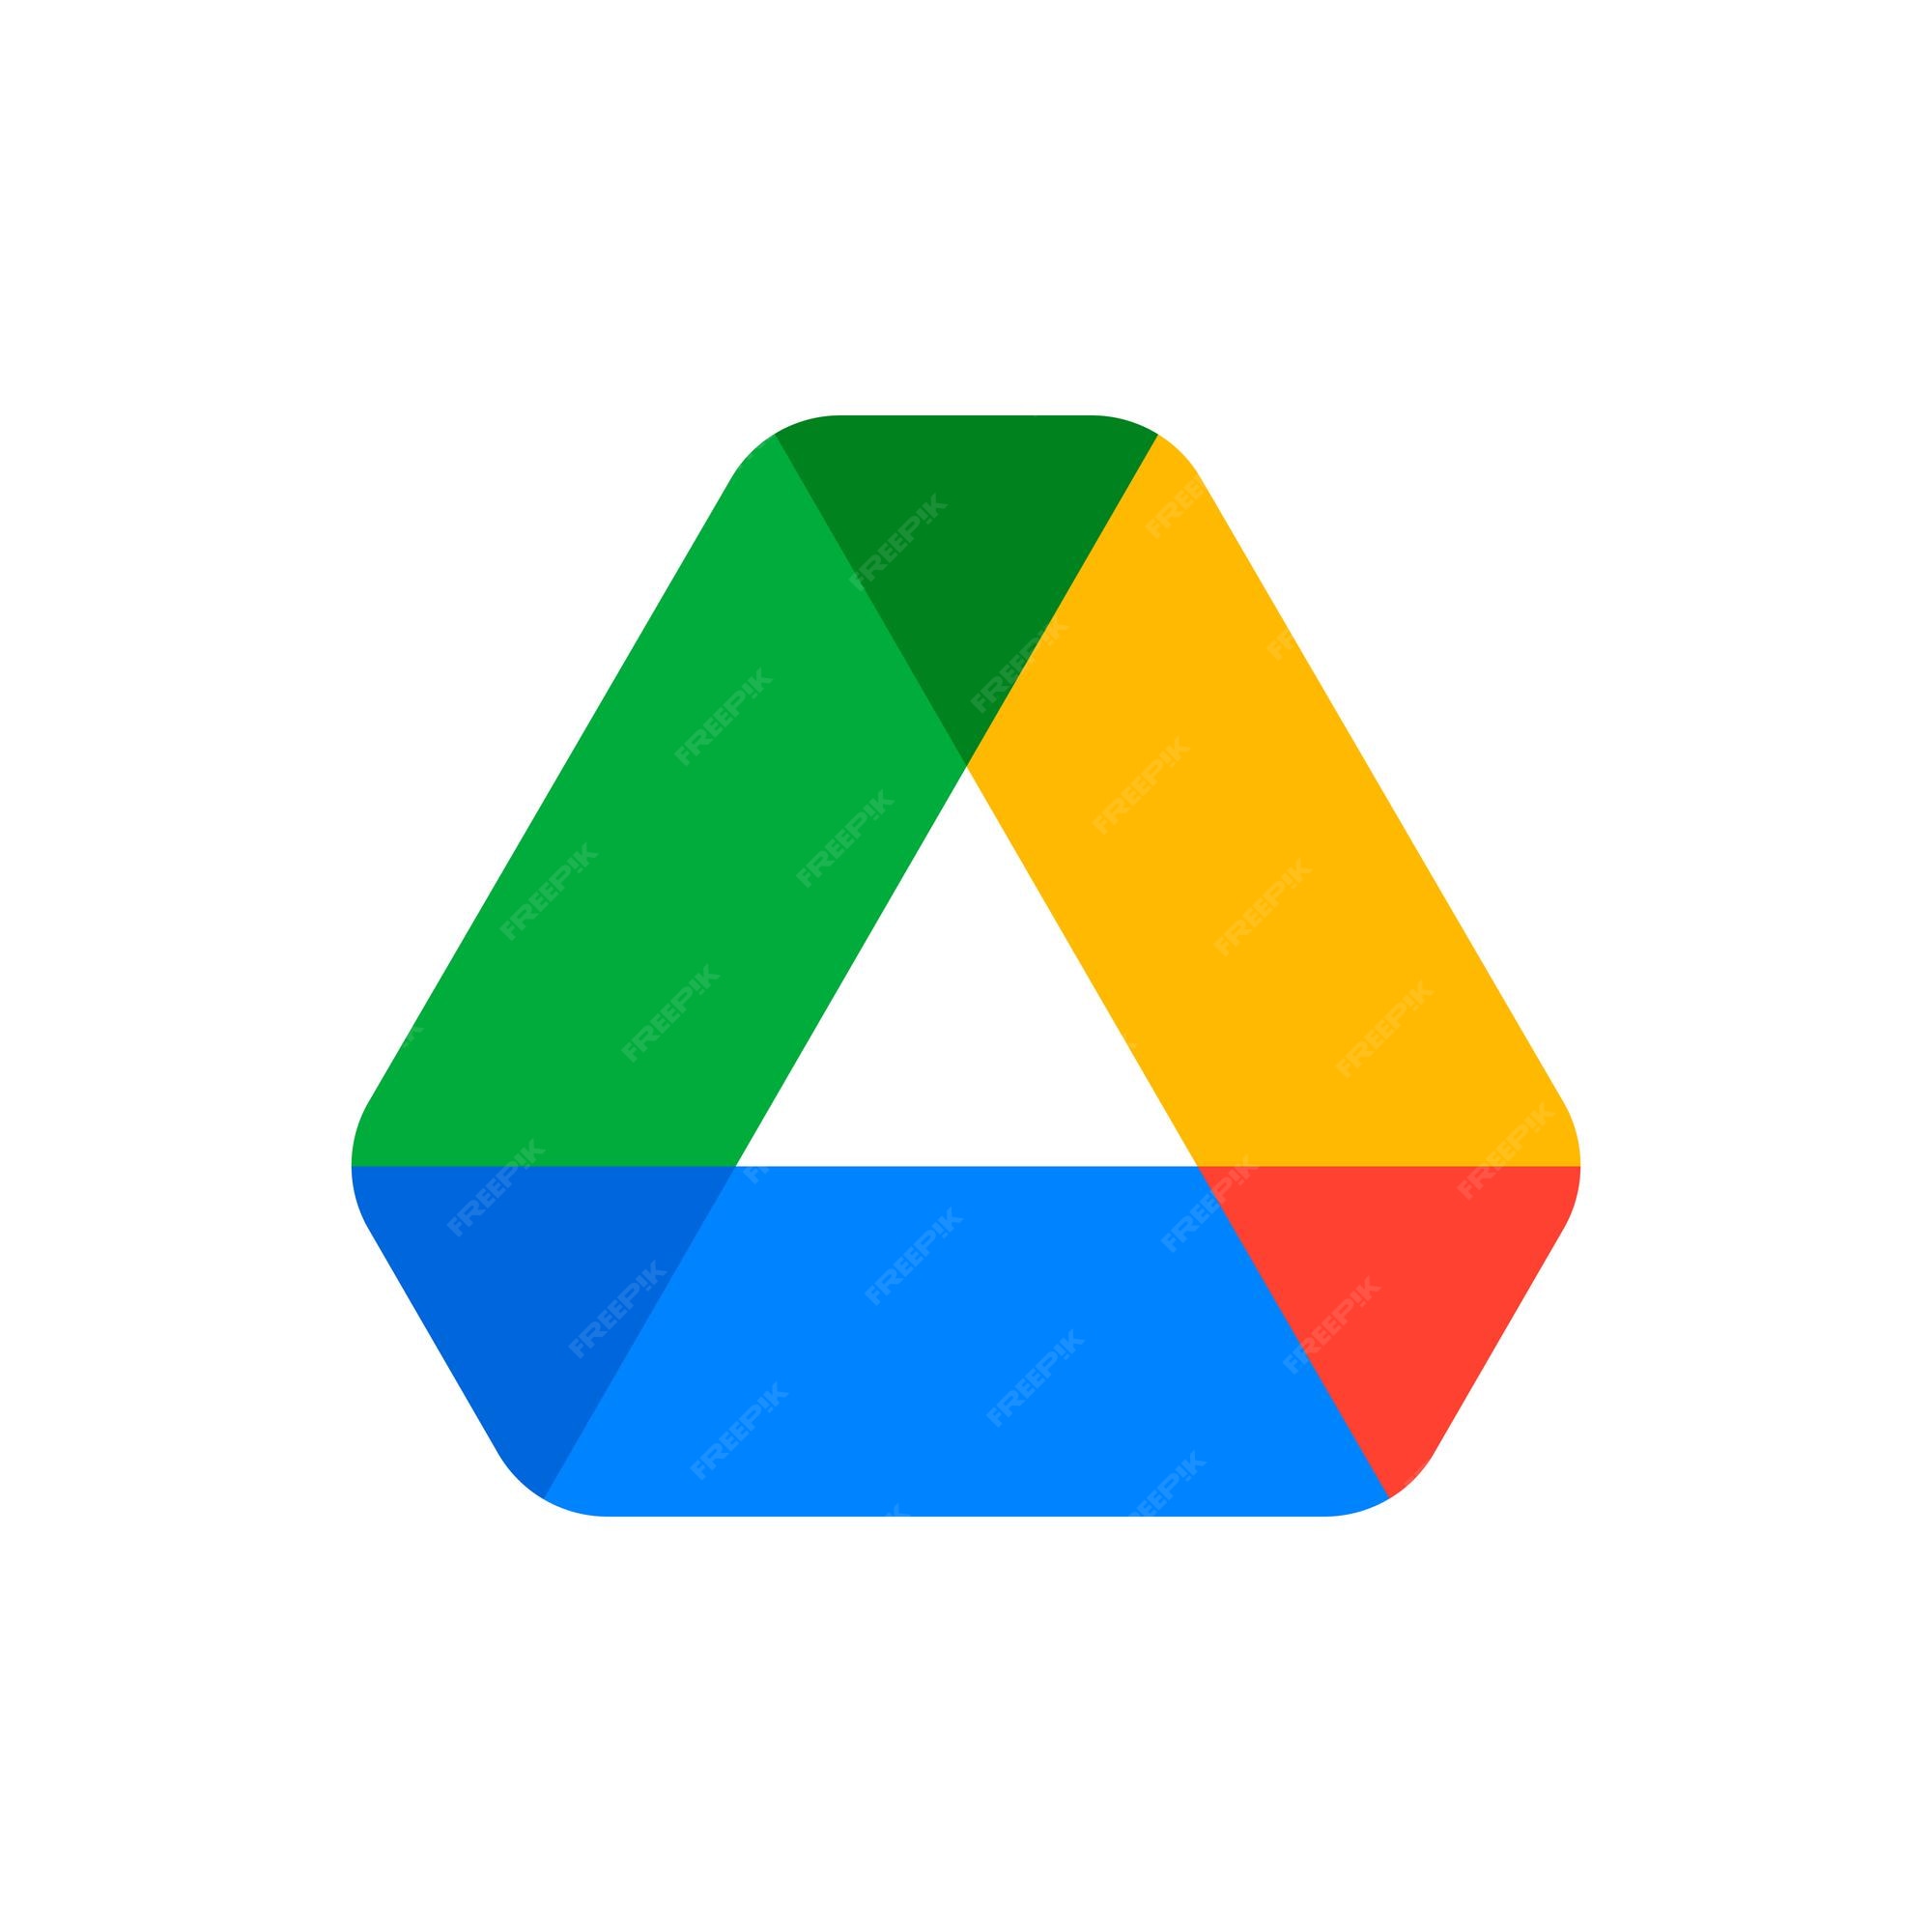 Premium Vector | Google drive logo